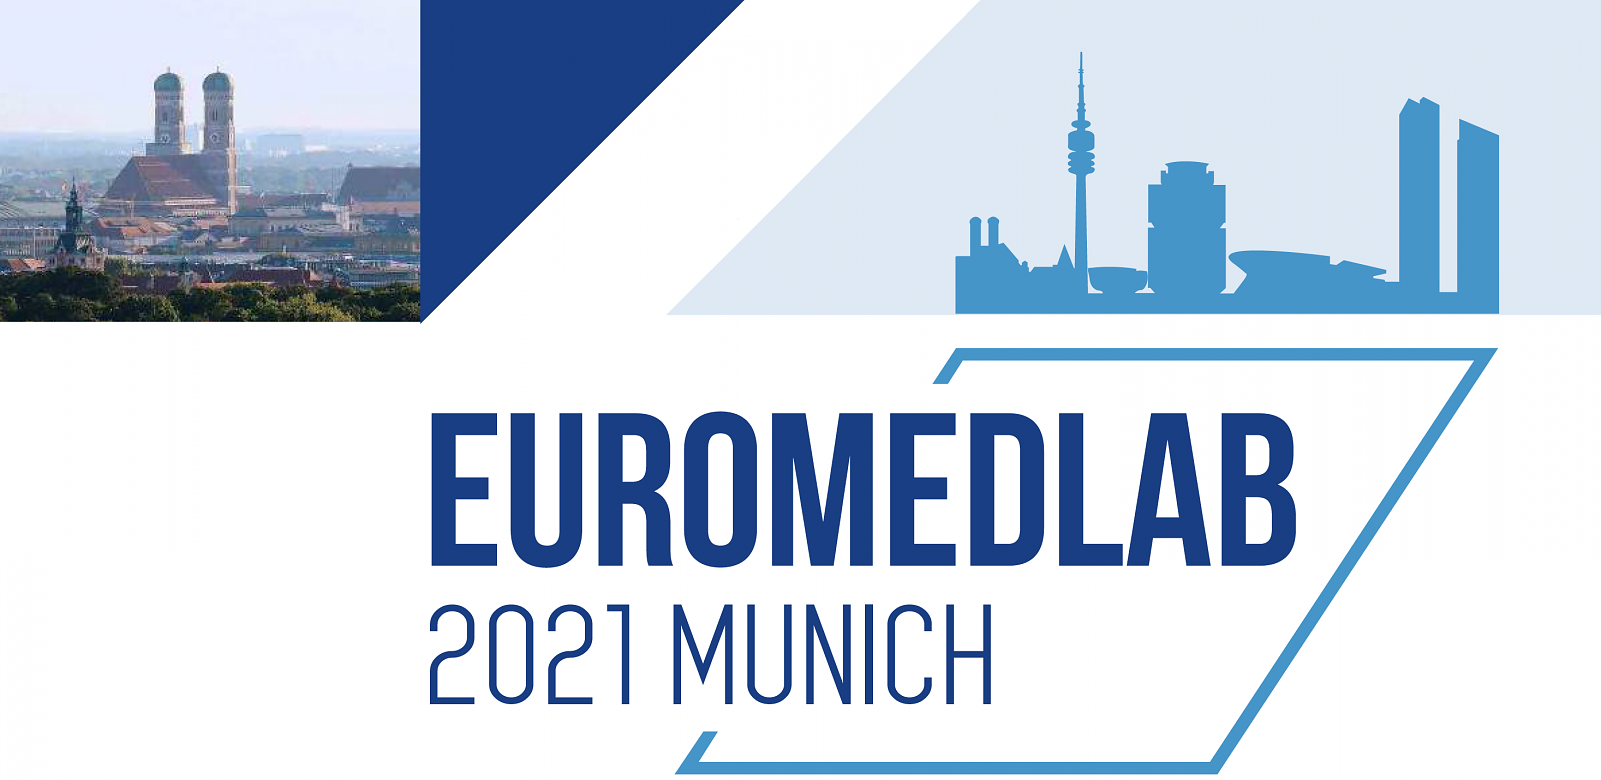 SBAS team at EuroMedLab 2021 